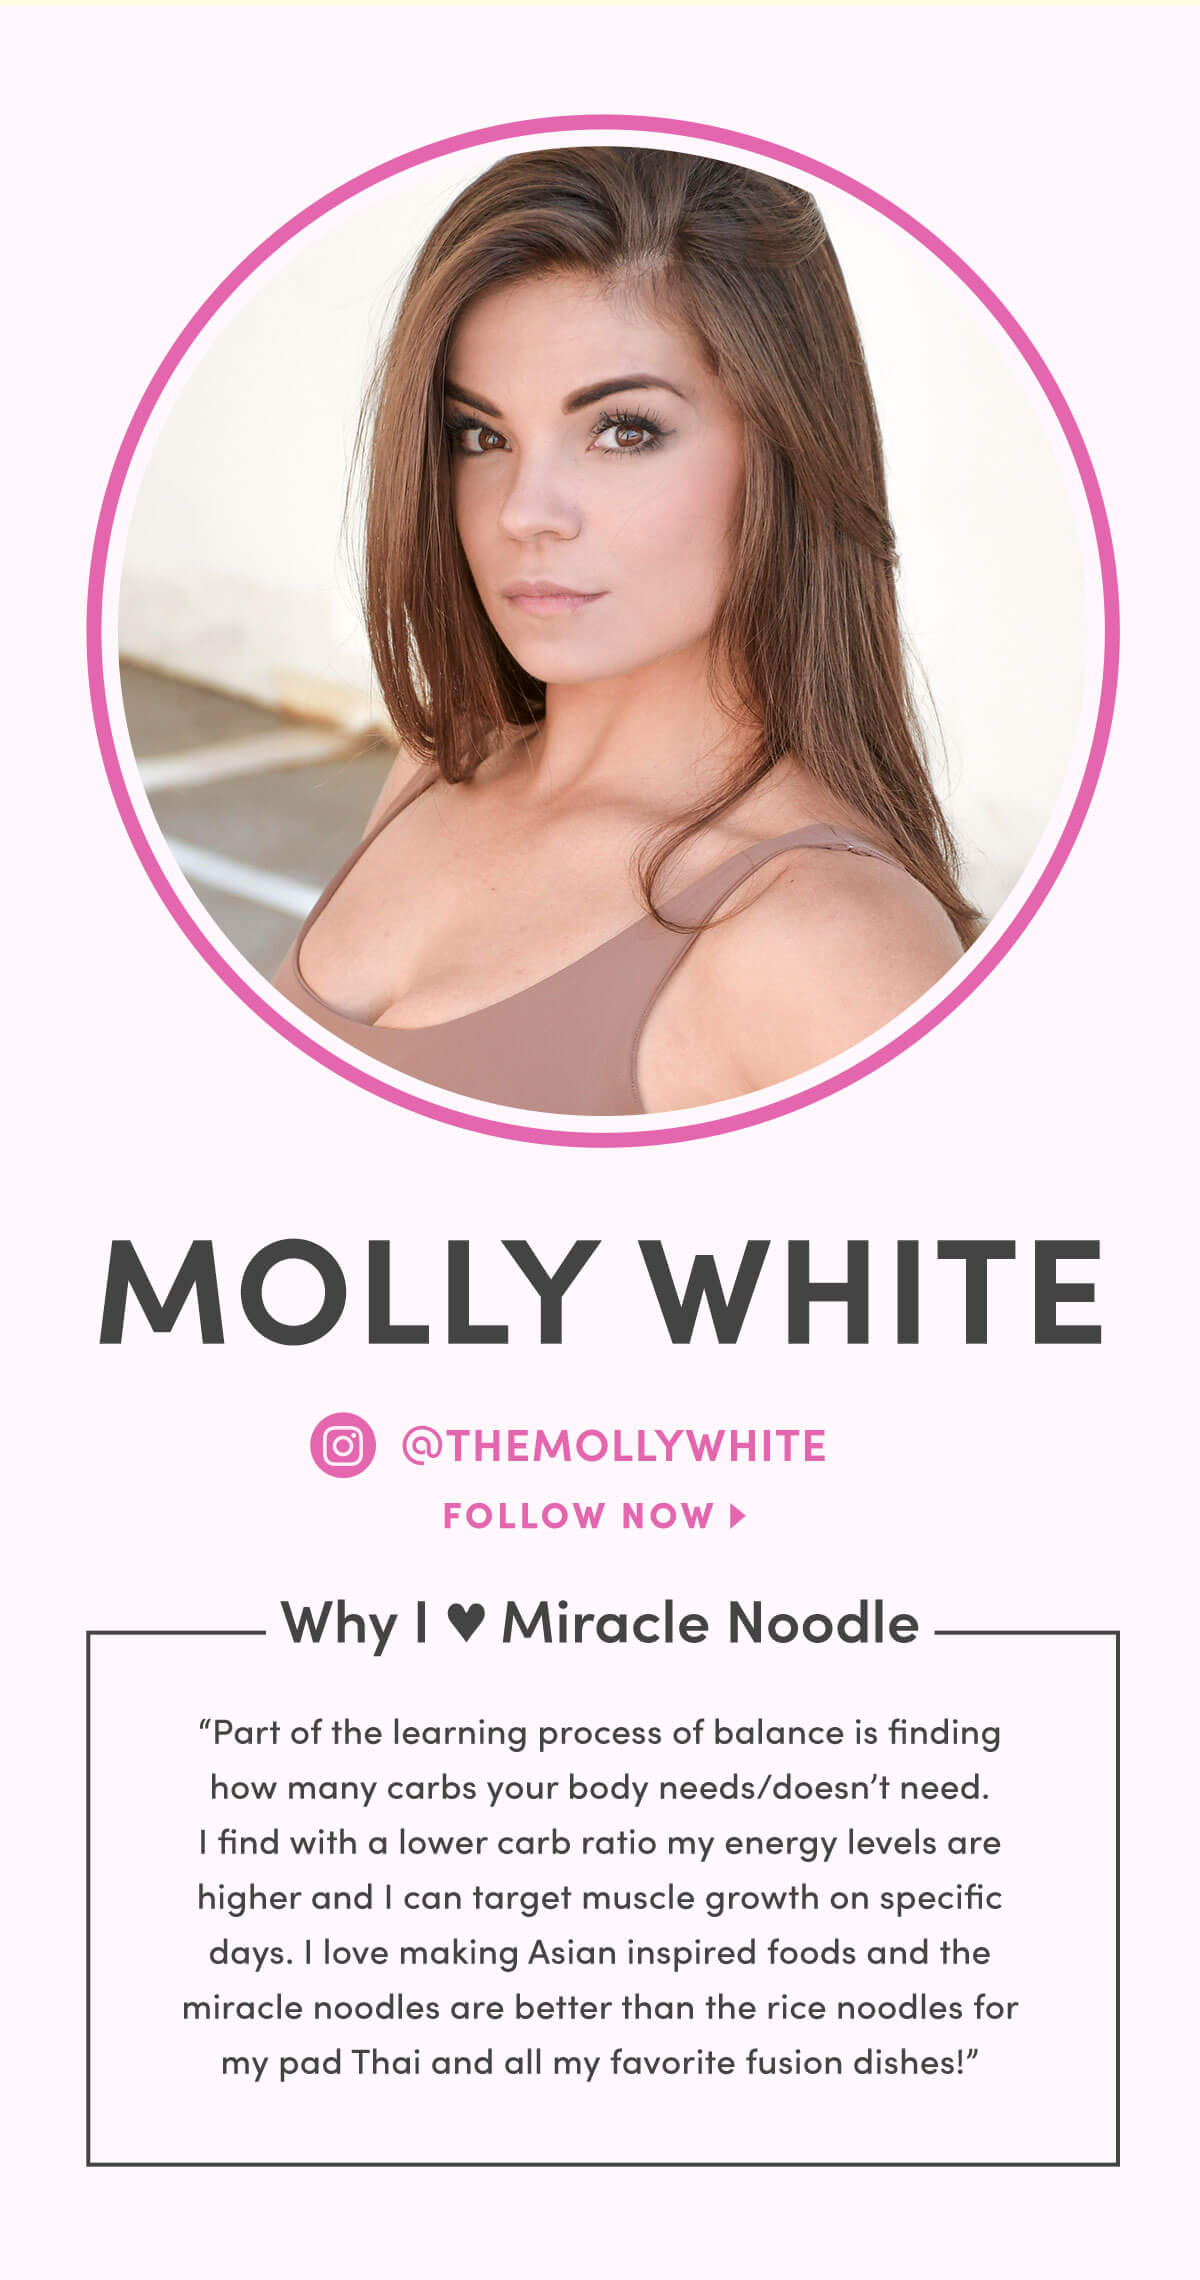 MOLLY WHITE - FOLLOW NOW